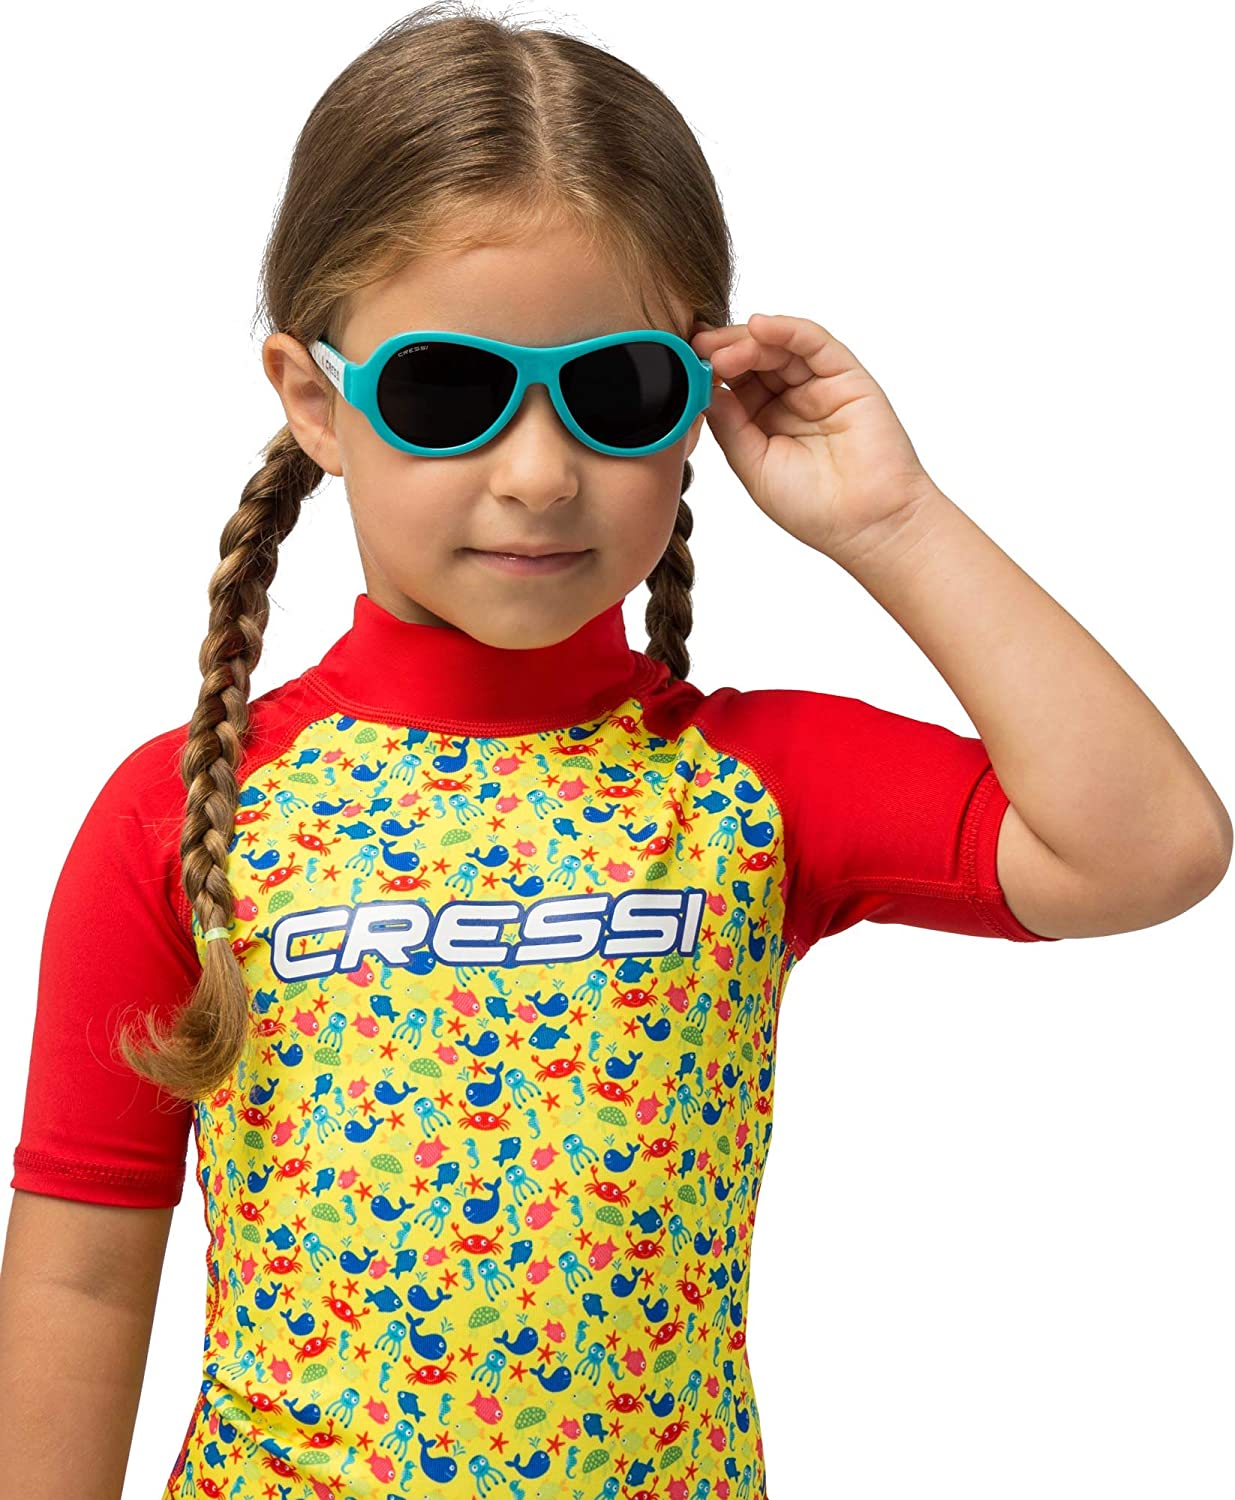 Cressi Aqua Pets Rash Guard Προστατευτικό μπλουζάκι - Κόκκινο/Κίτρινο 5137